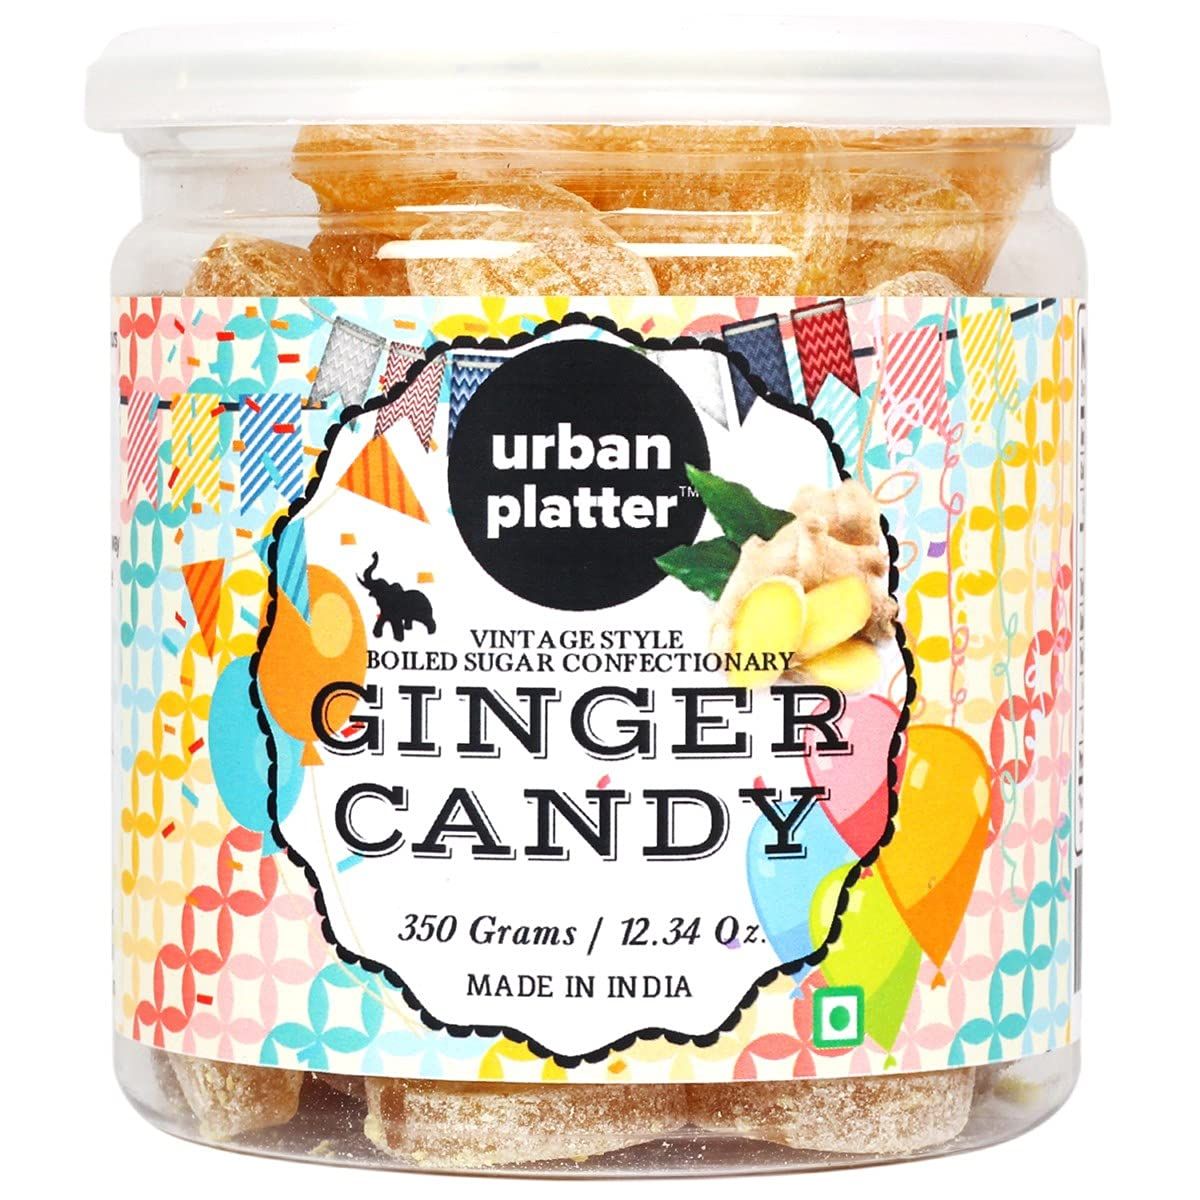 Urban Platter Ginger Candy Image